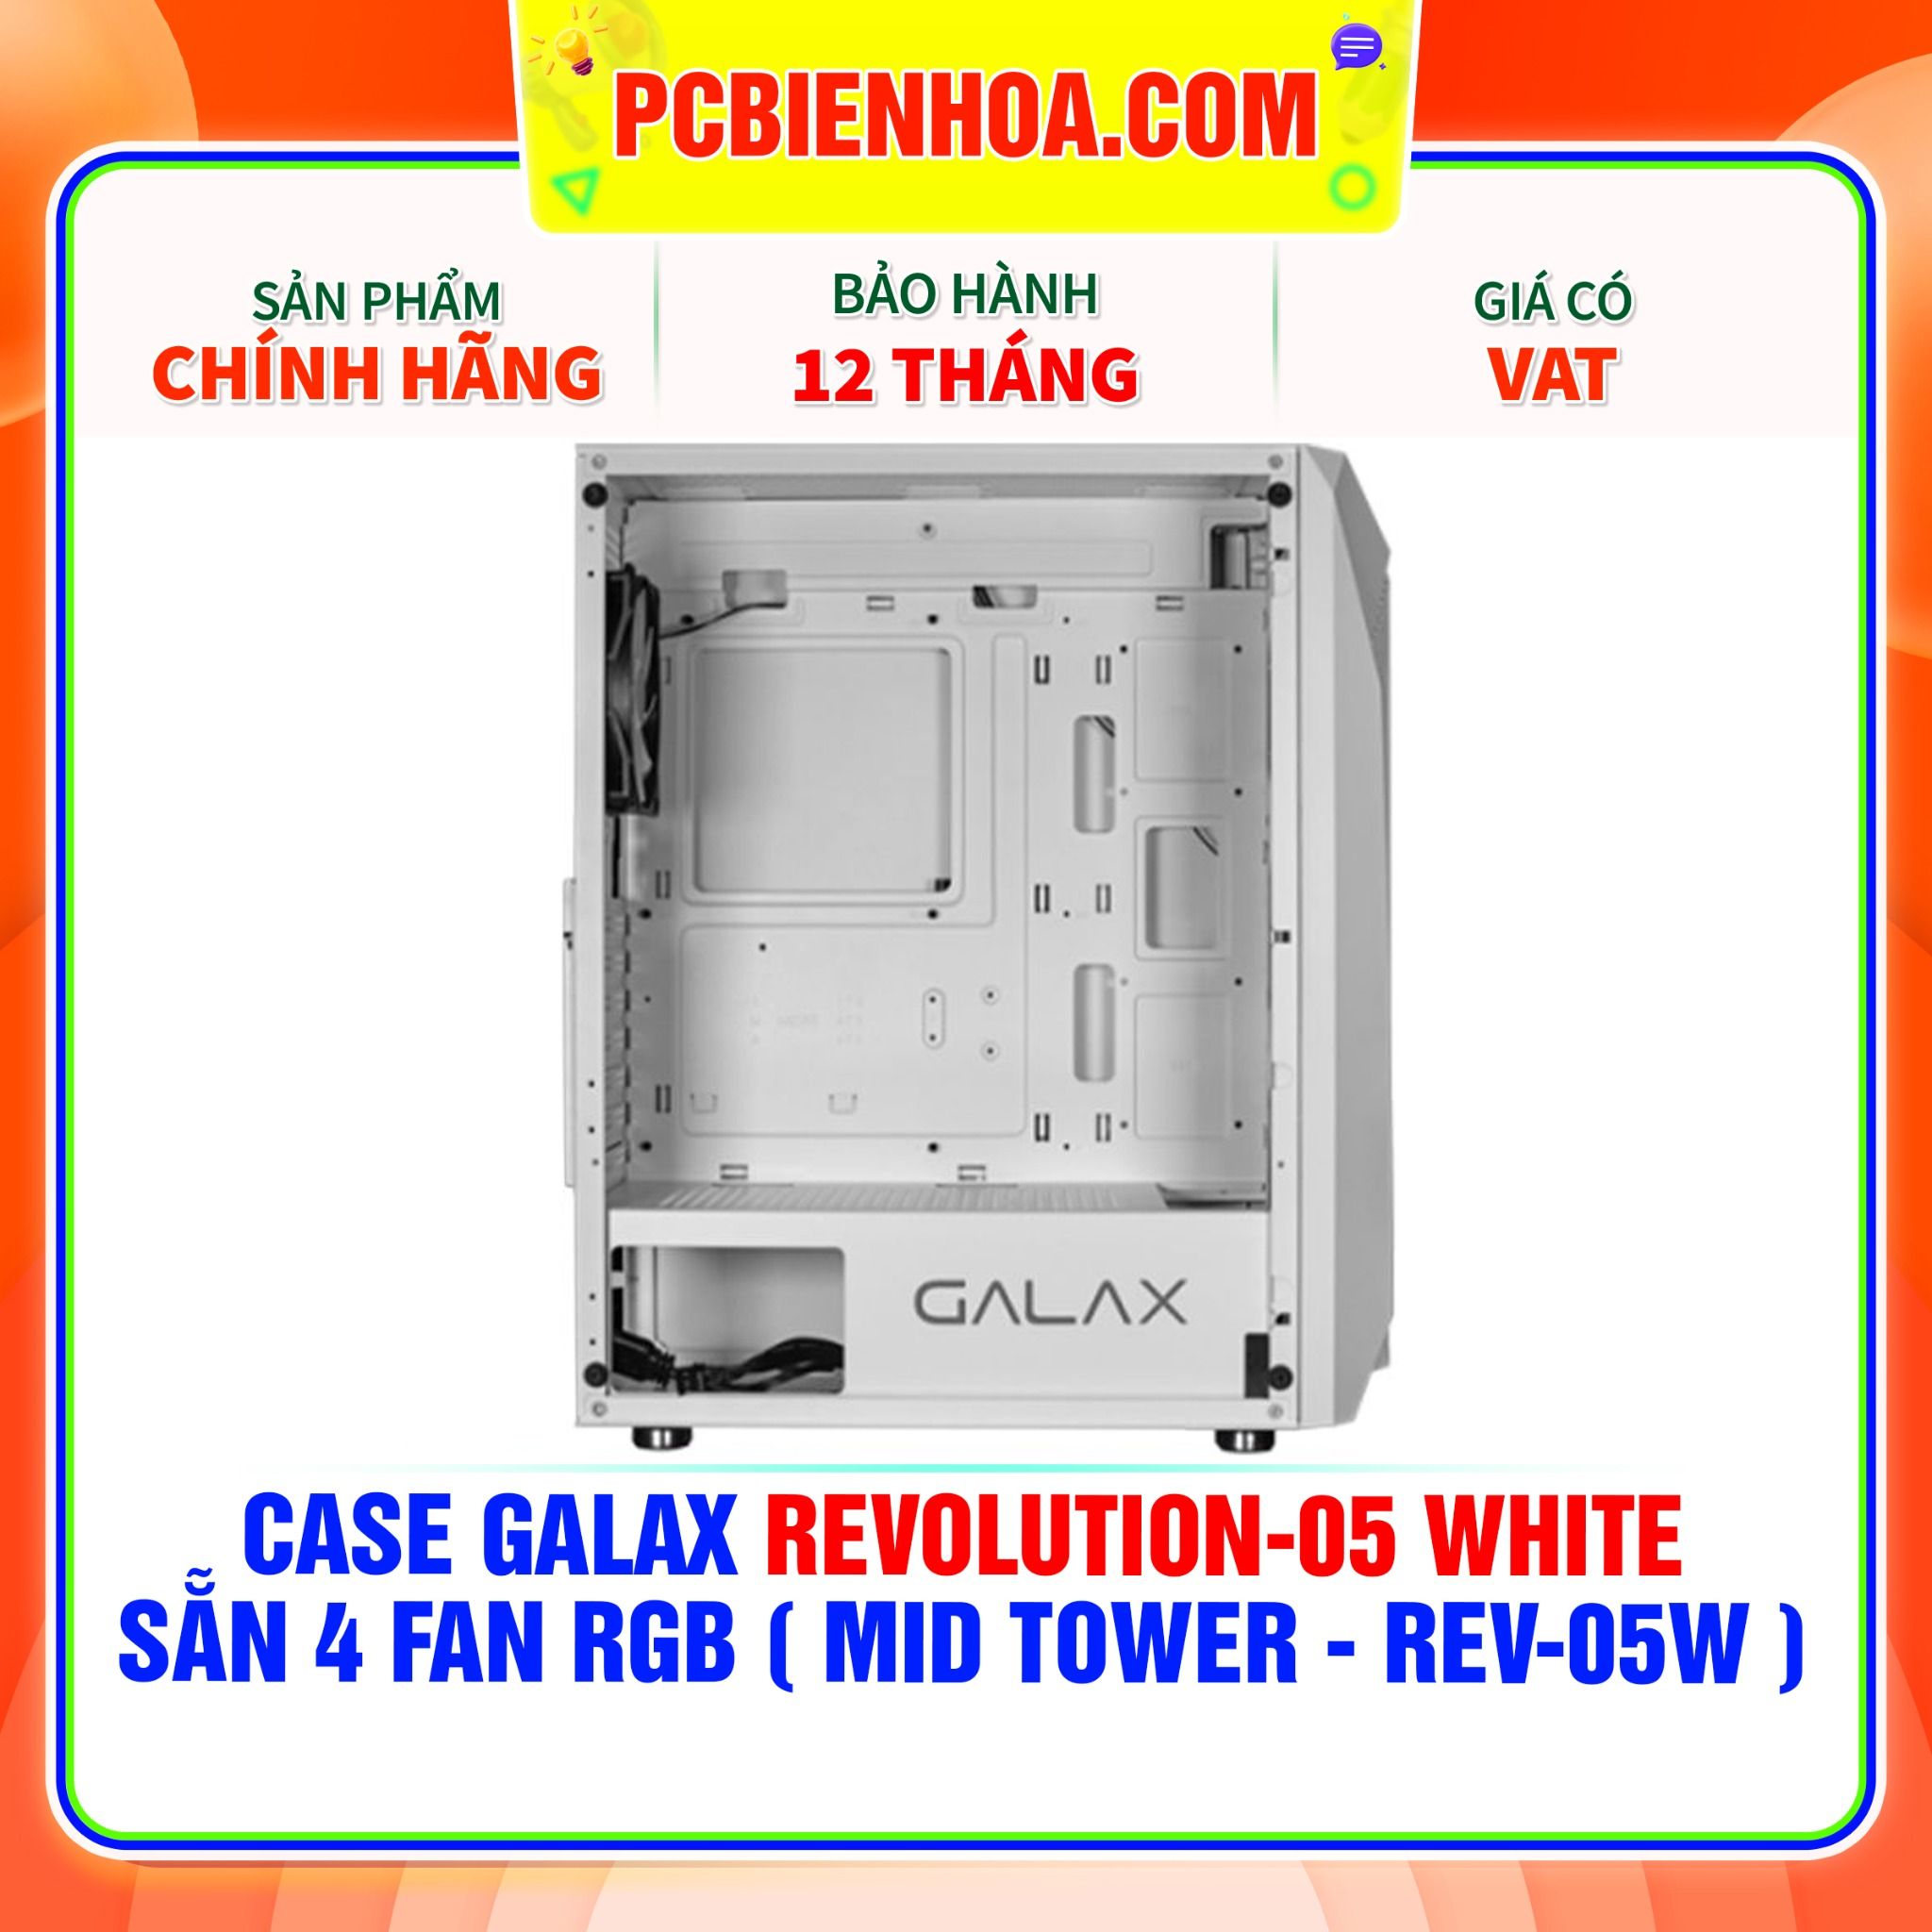  CASE GALAX REVOLUTION-05 WHITE - SẴN 4 FAN RGB ( MID TOWER - REV-05W ) 